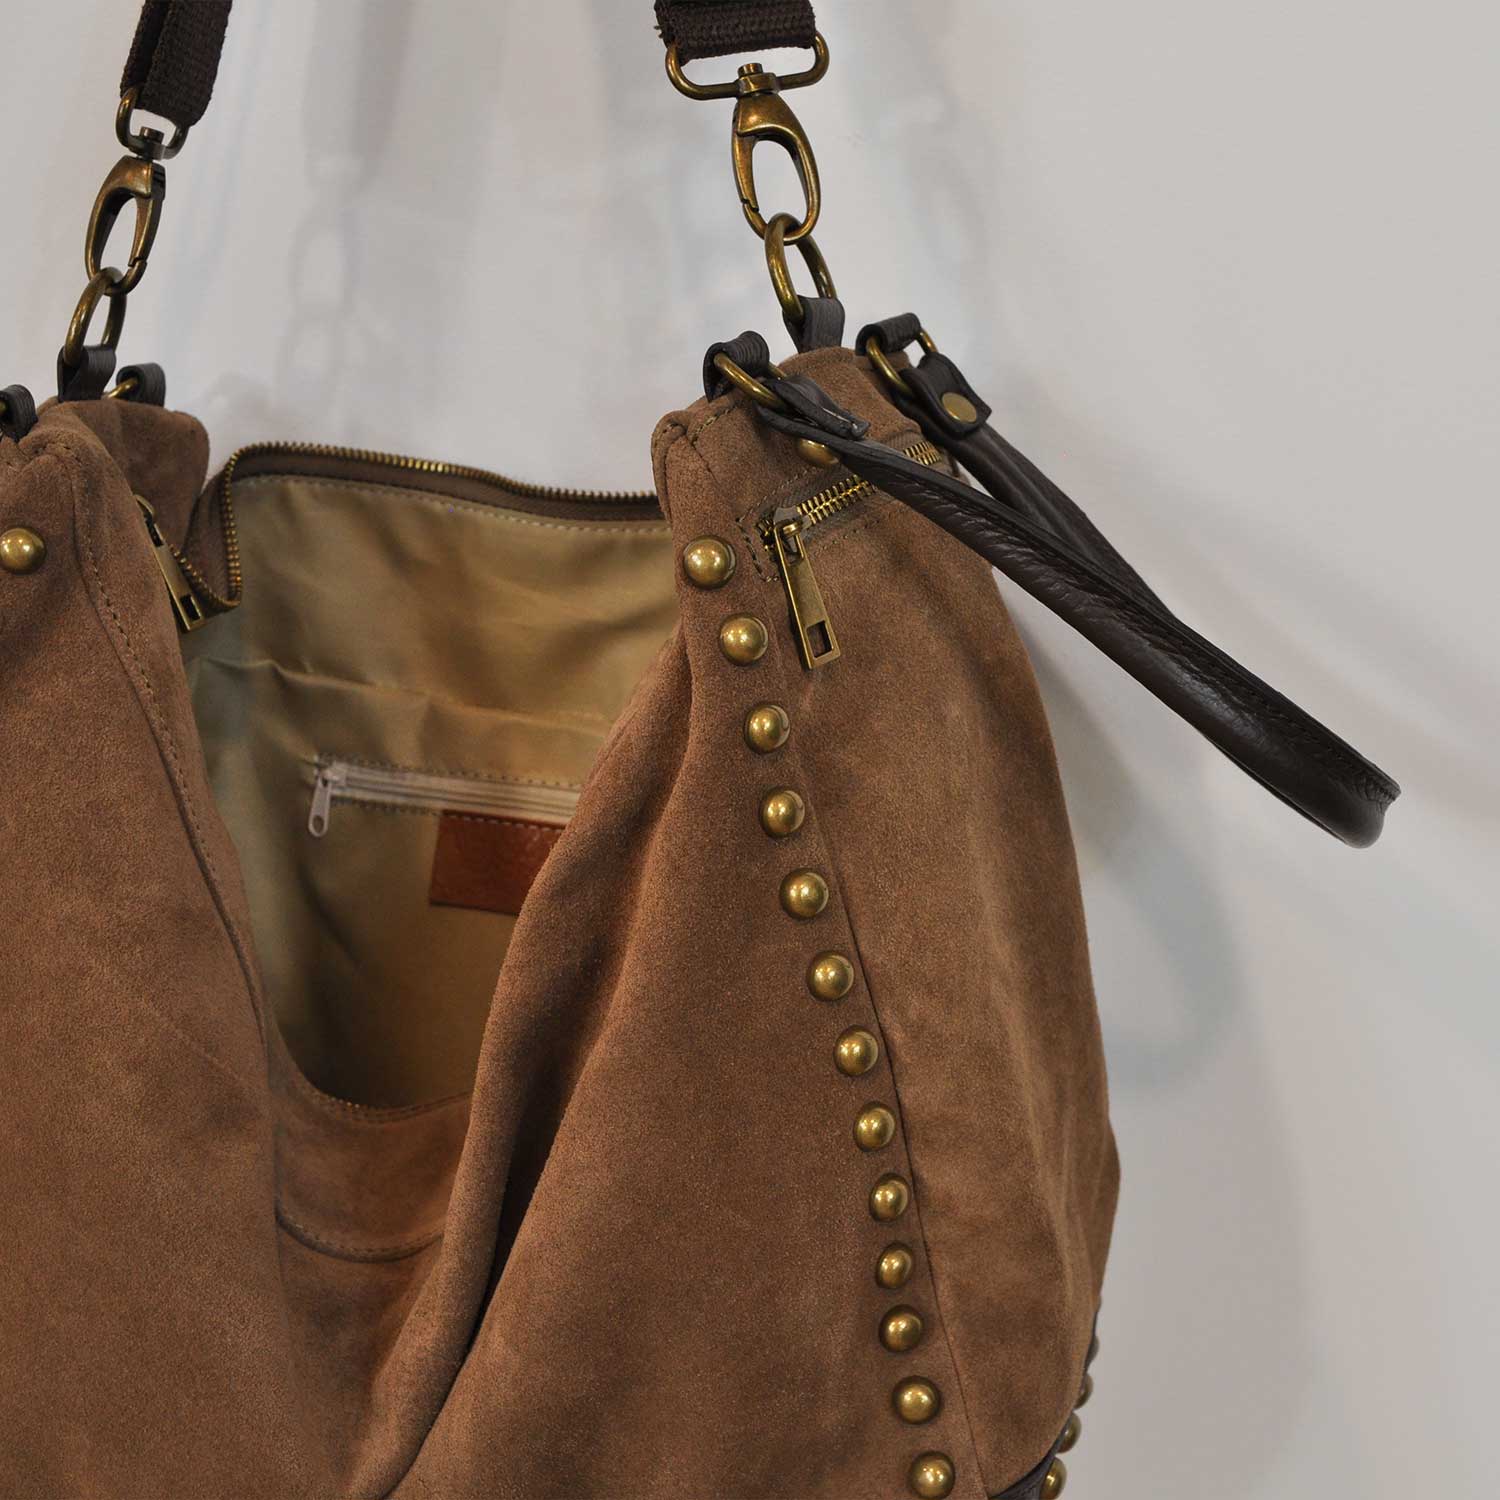 Studded leather bag